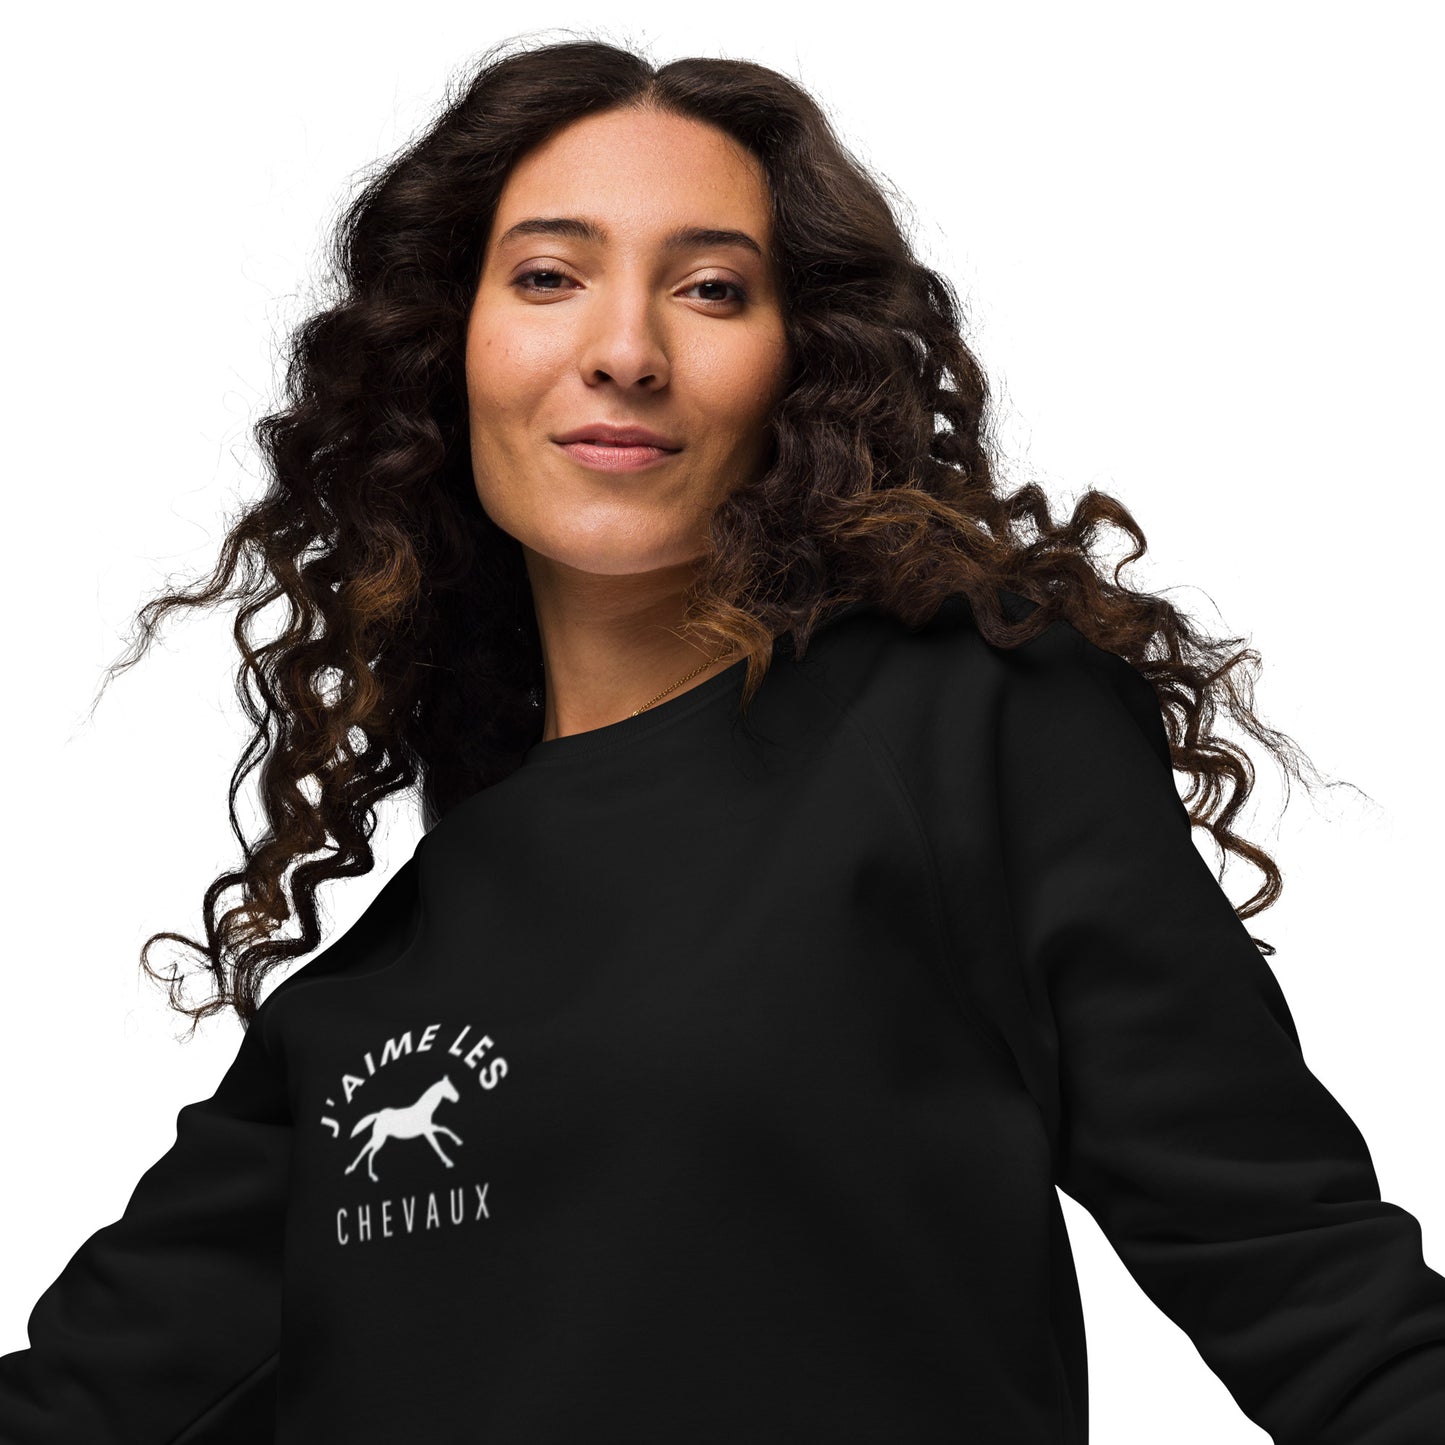 "I Love Horses" In French - Black Unisex Organic Crewneck Sweatshirt